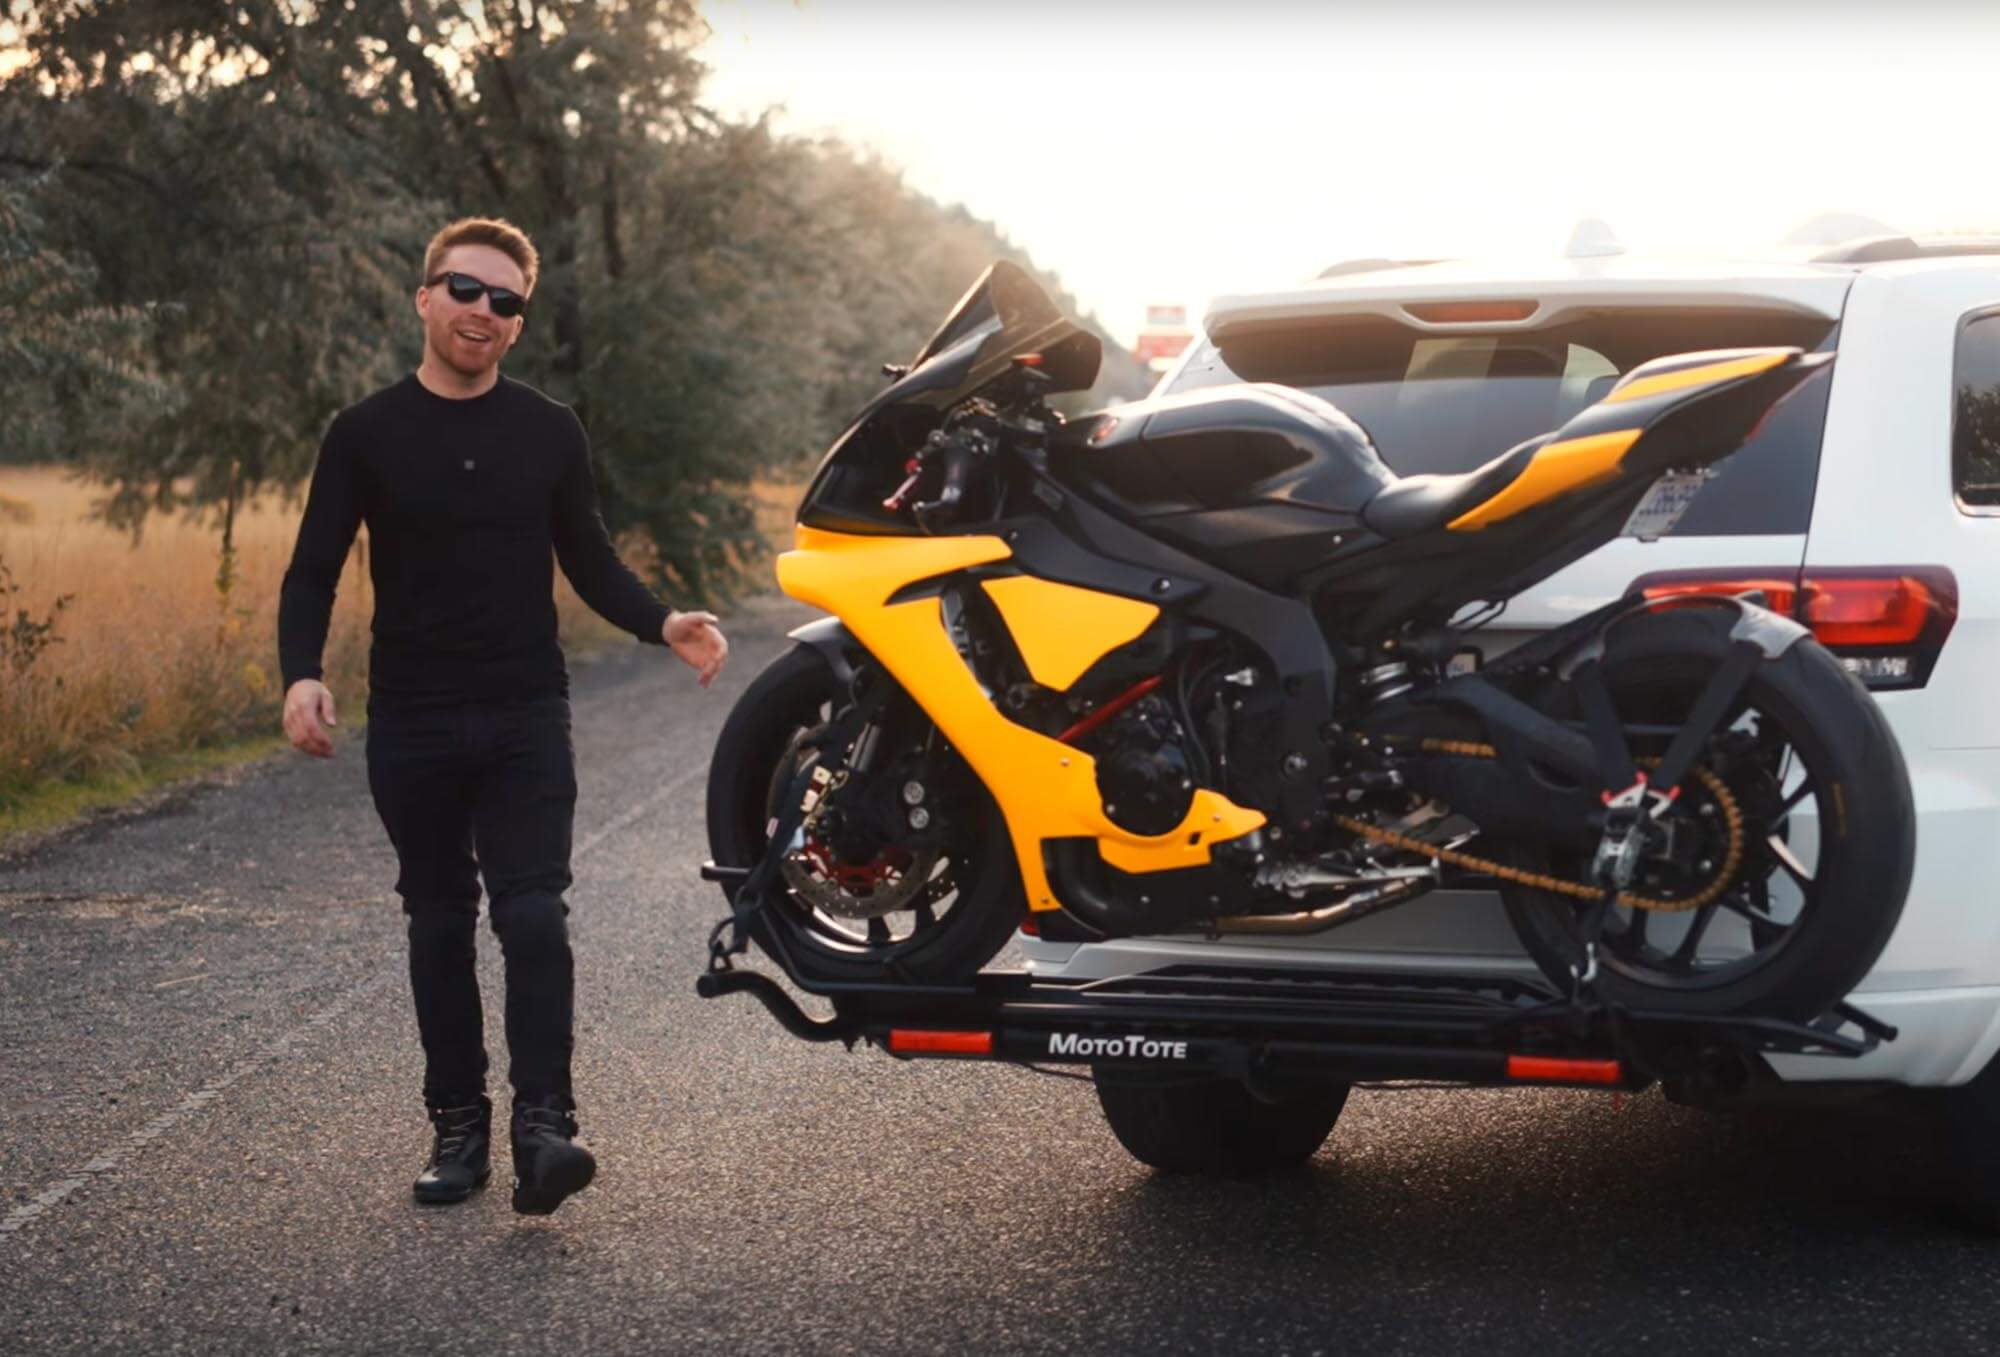 Kyle's (@staticrider) Yamaha R1 & MotoTote Max+